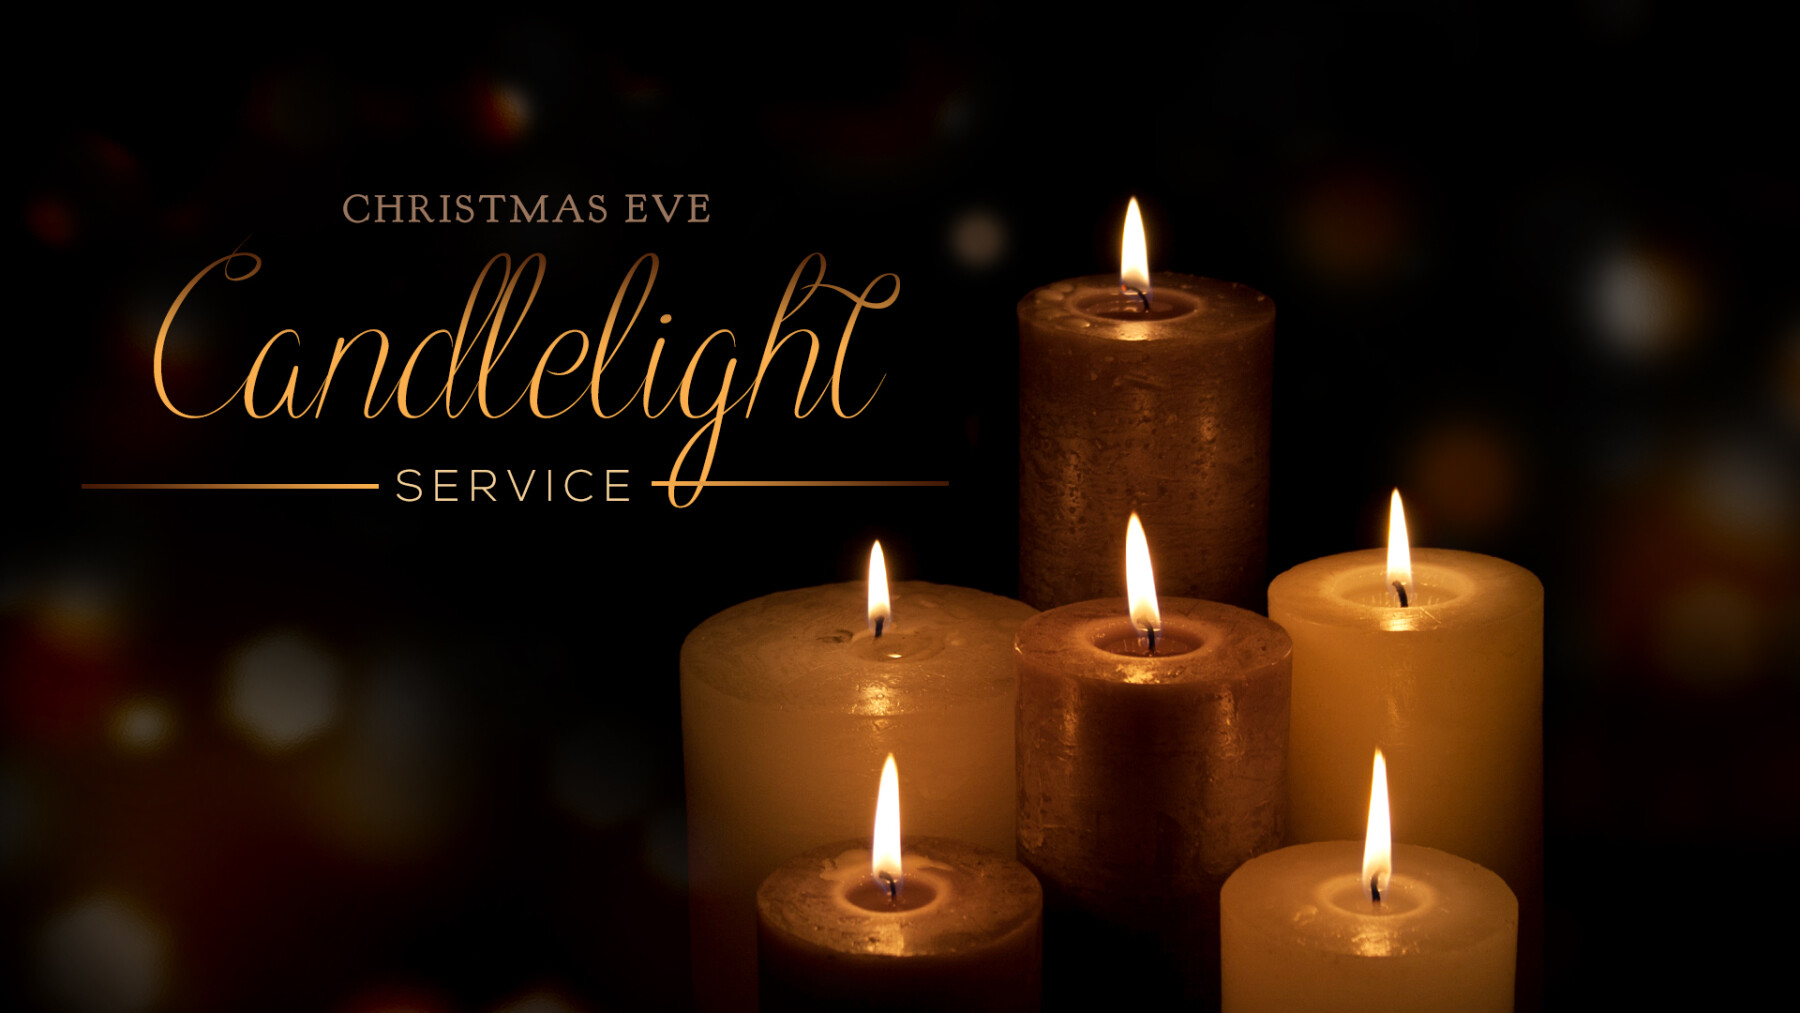 Christmas Eve Candlelight Service